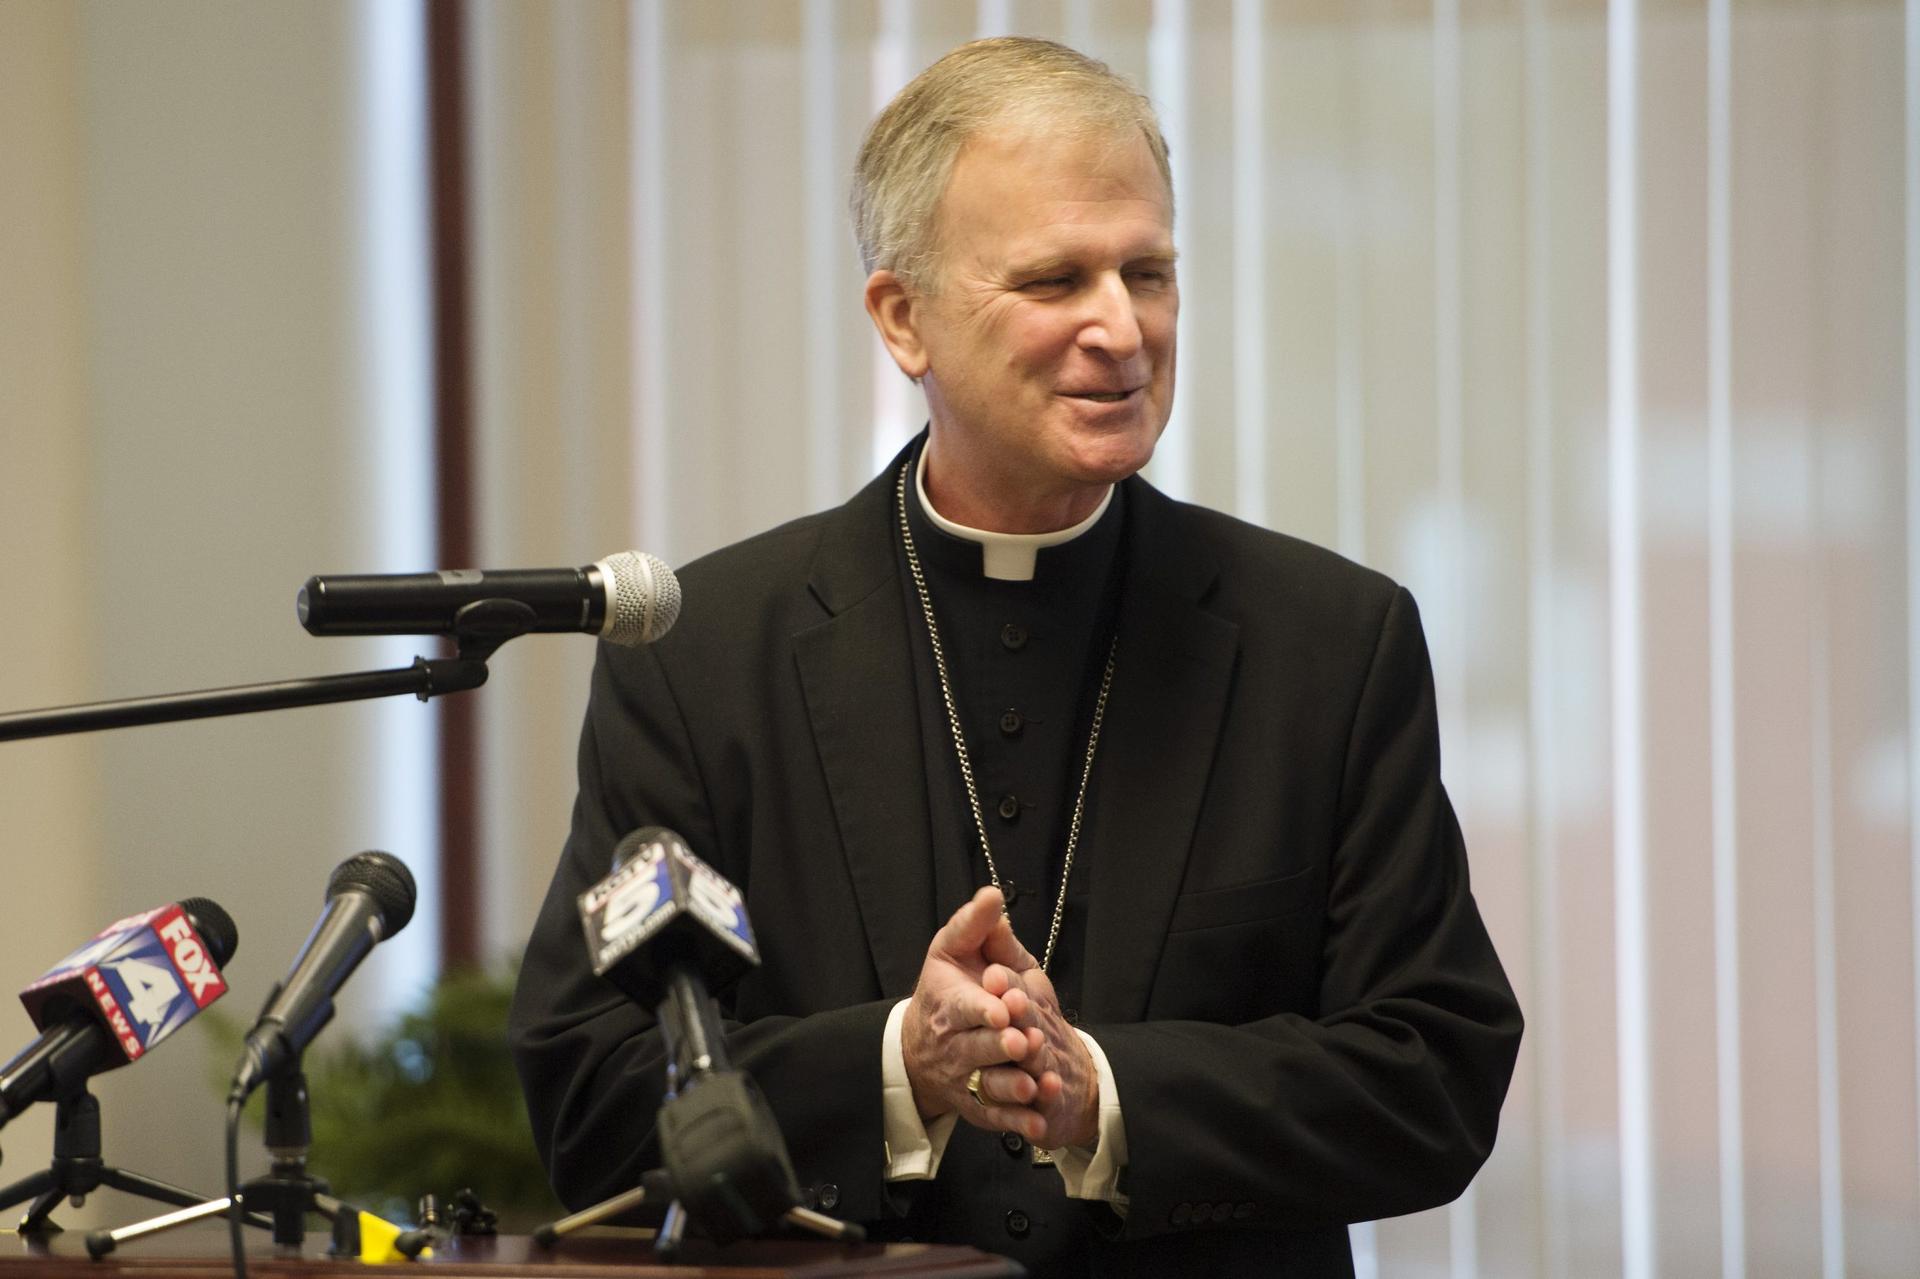 Catholic bishop in Missouri tells voters to back pro-life candidates